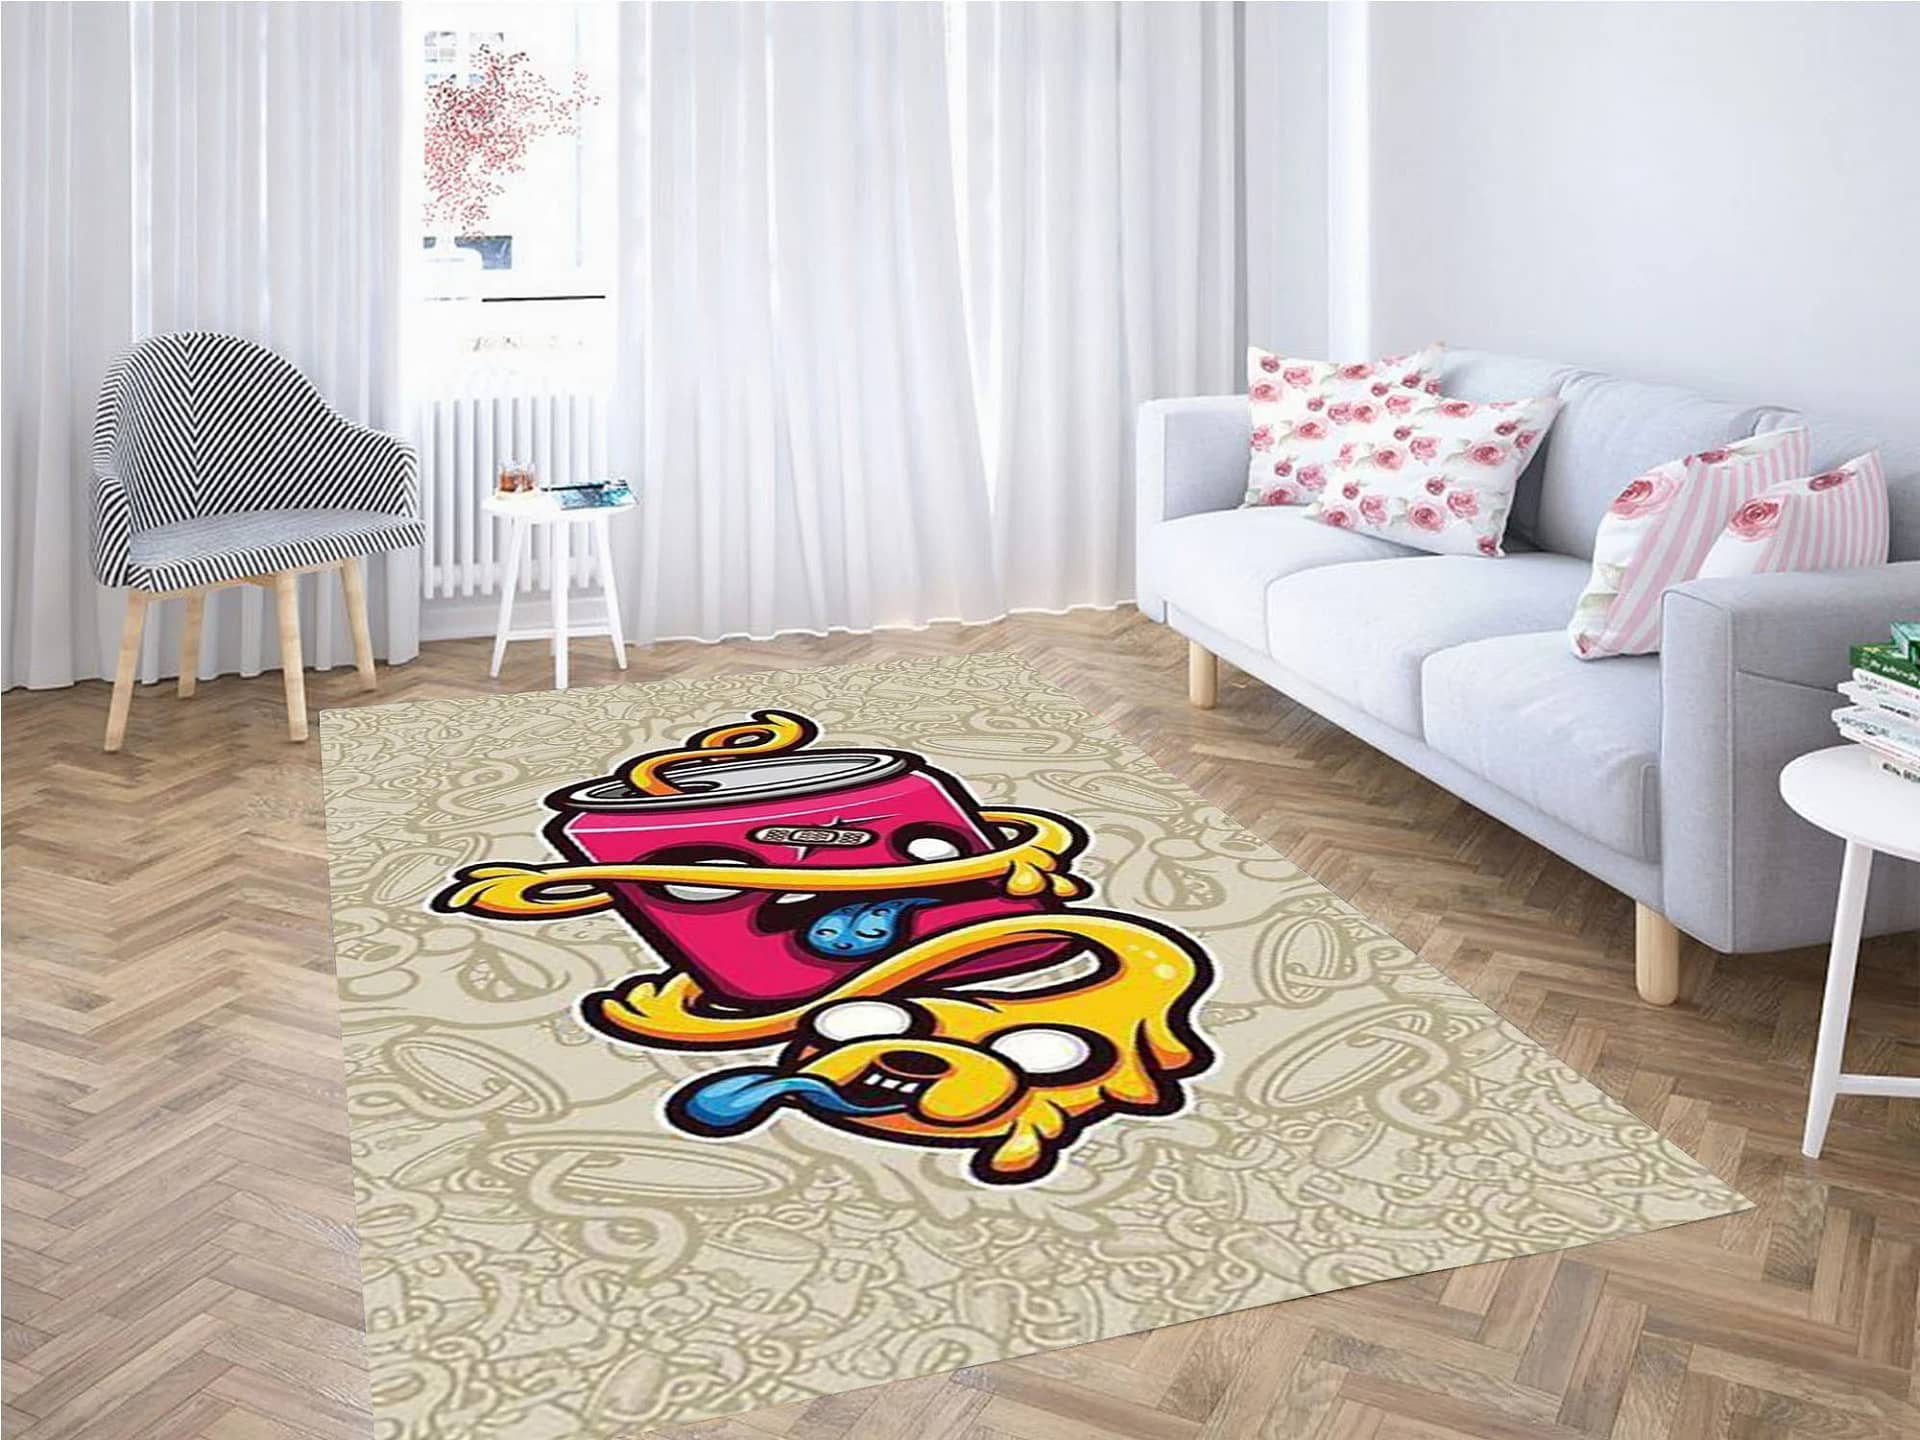 Jake The Dog Wallpaper Carpet Rug